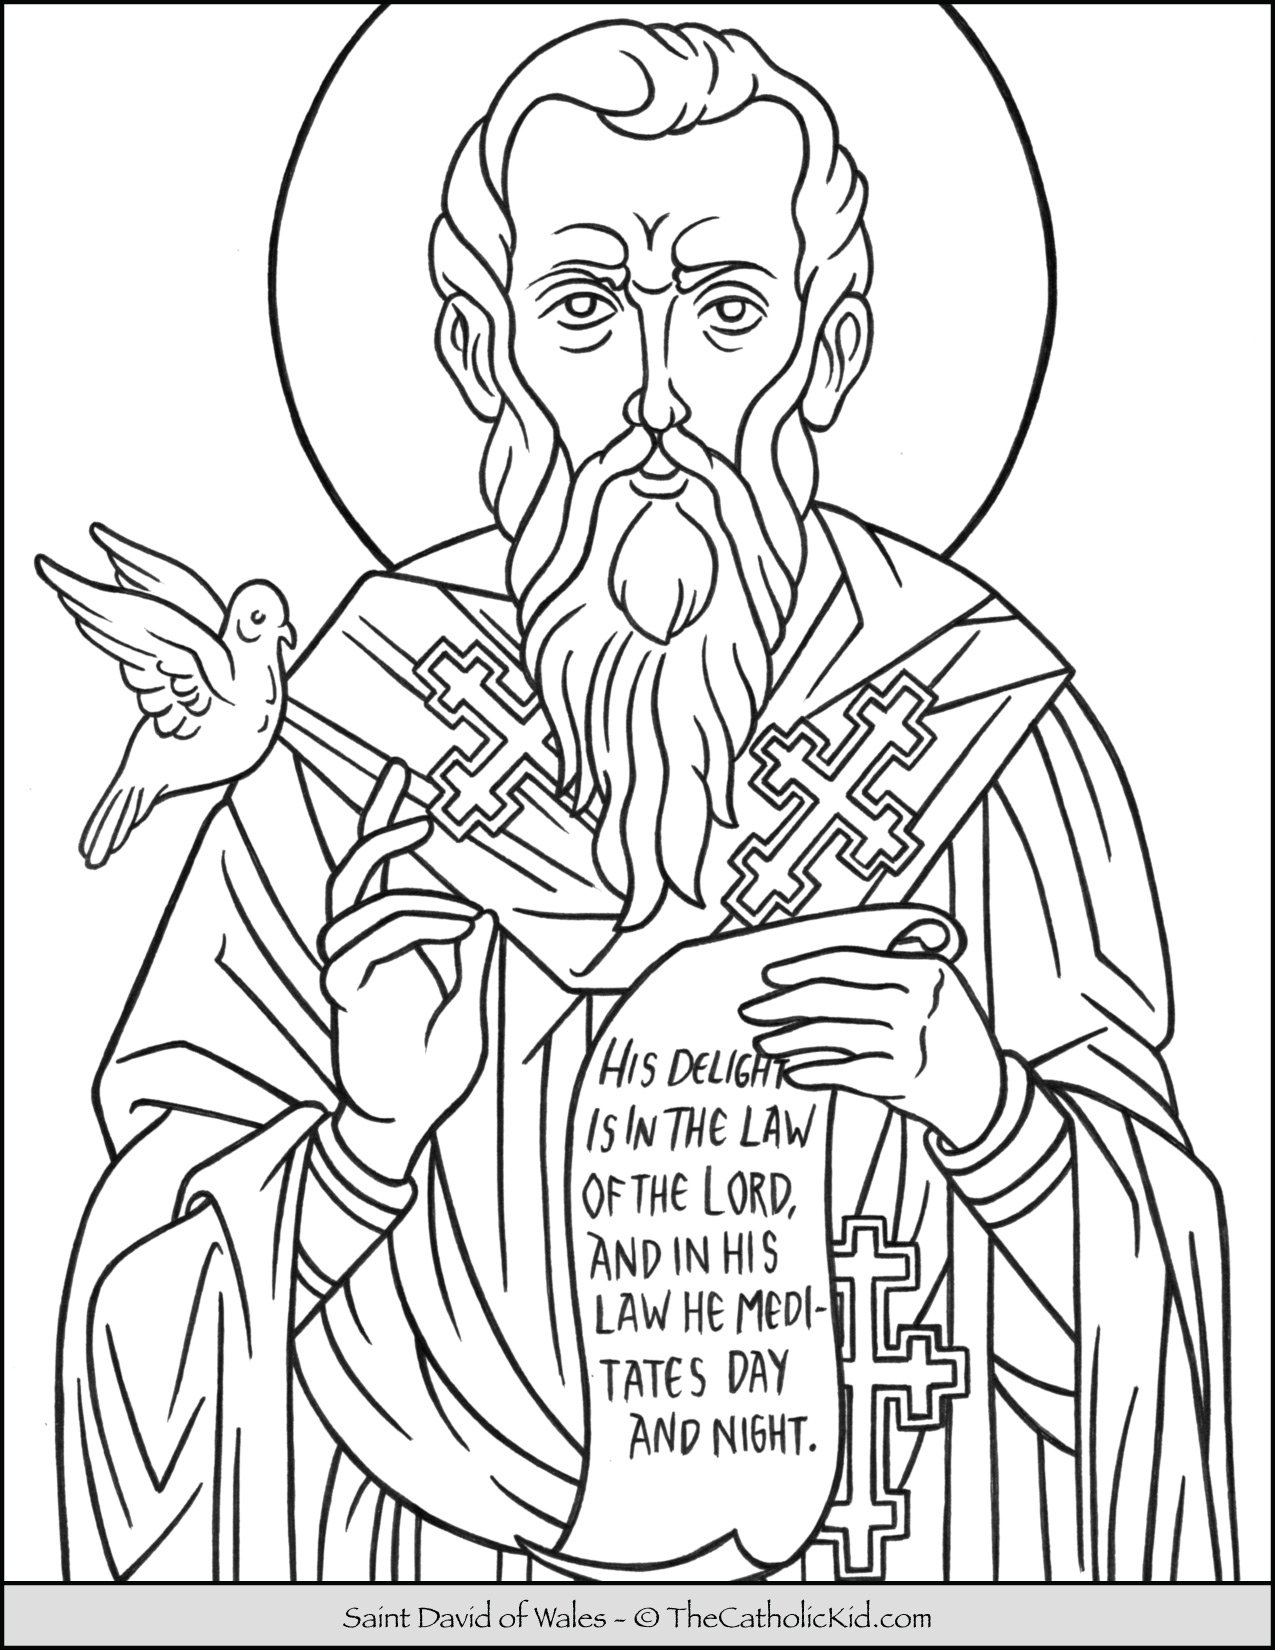 Saint David of Wales Coloring Page - TheCatholicKid.com